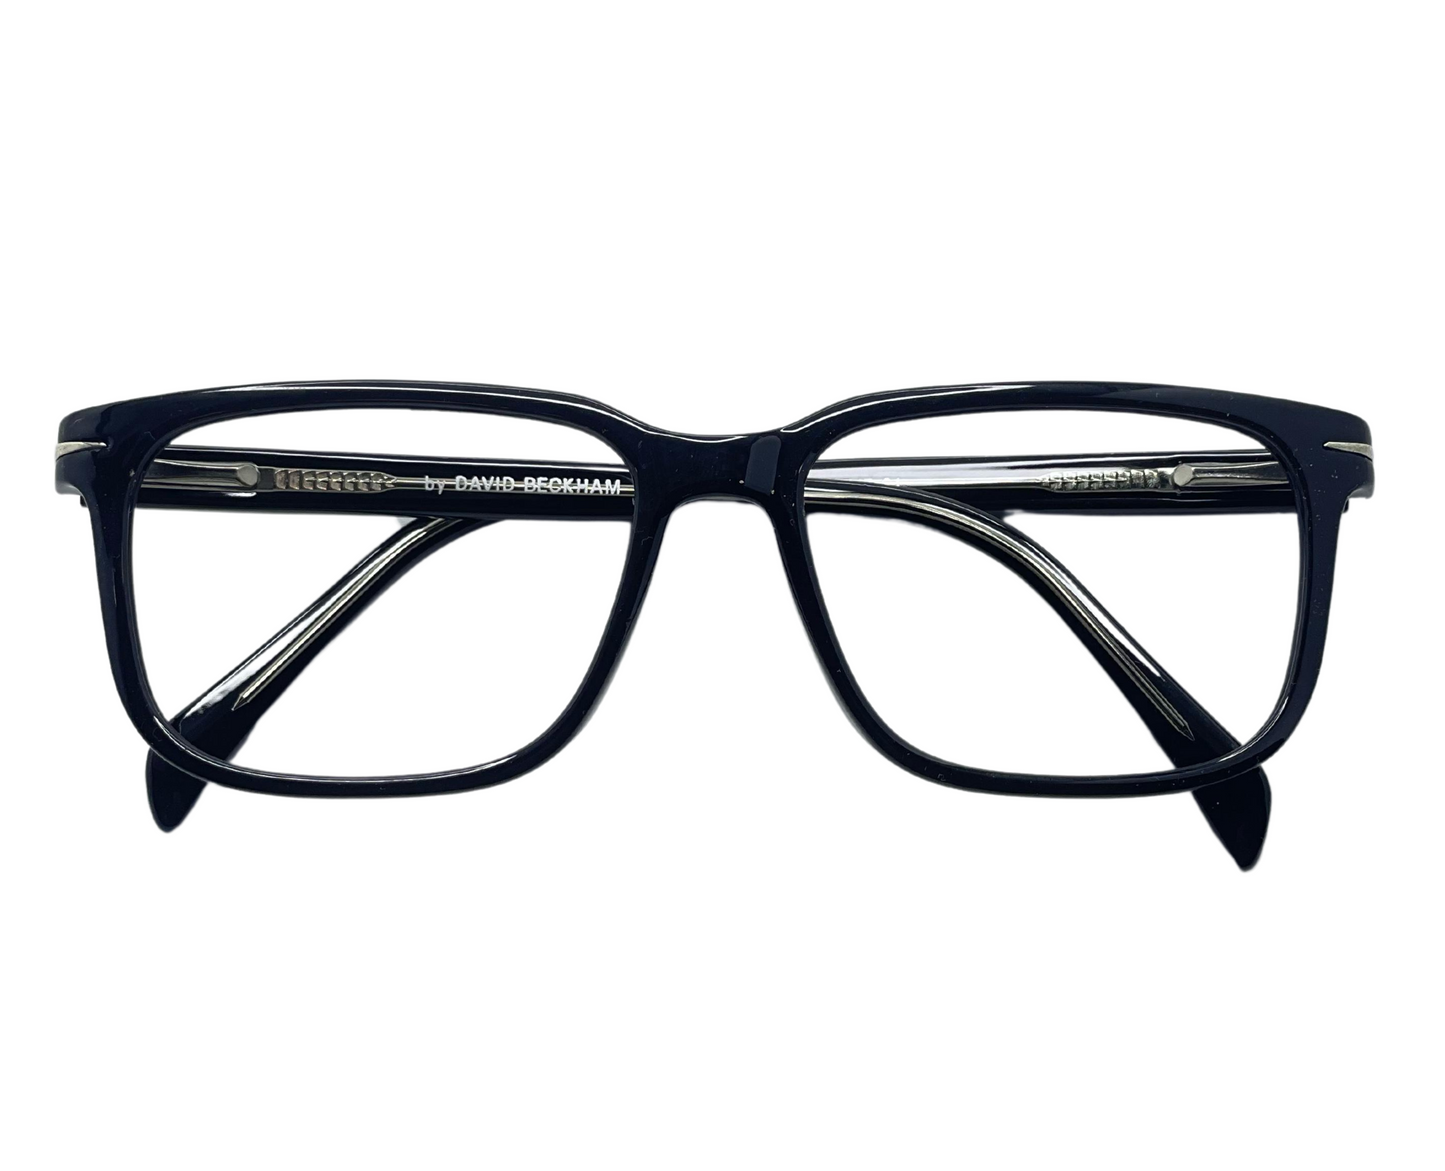 NS Deluxe - 001 - Black - Eyeglasses